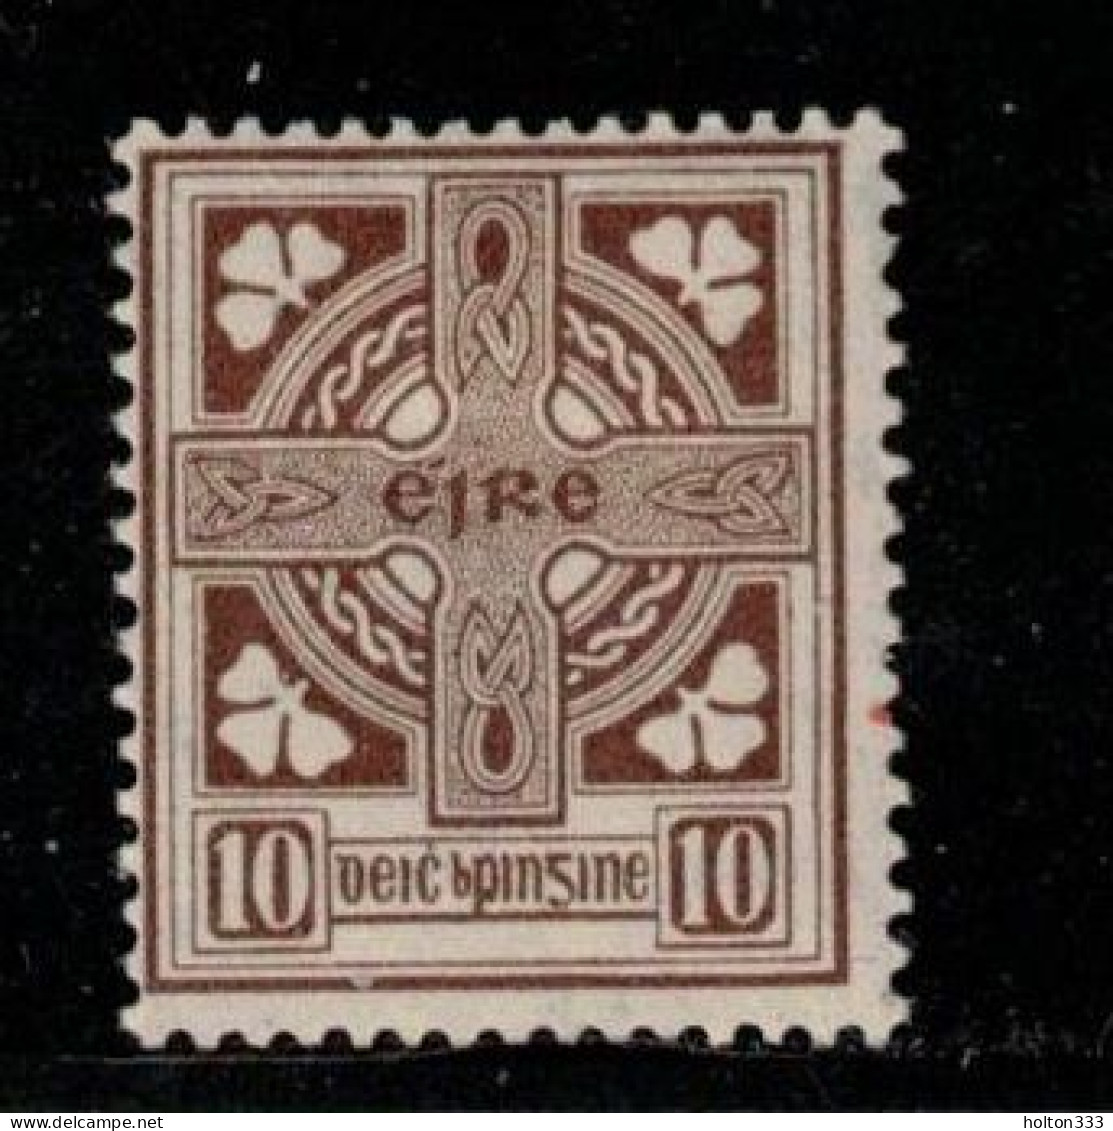 IRELAND Scott # 116 MH - Celtic Cross - Unused Stamps